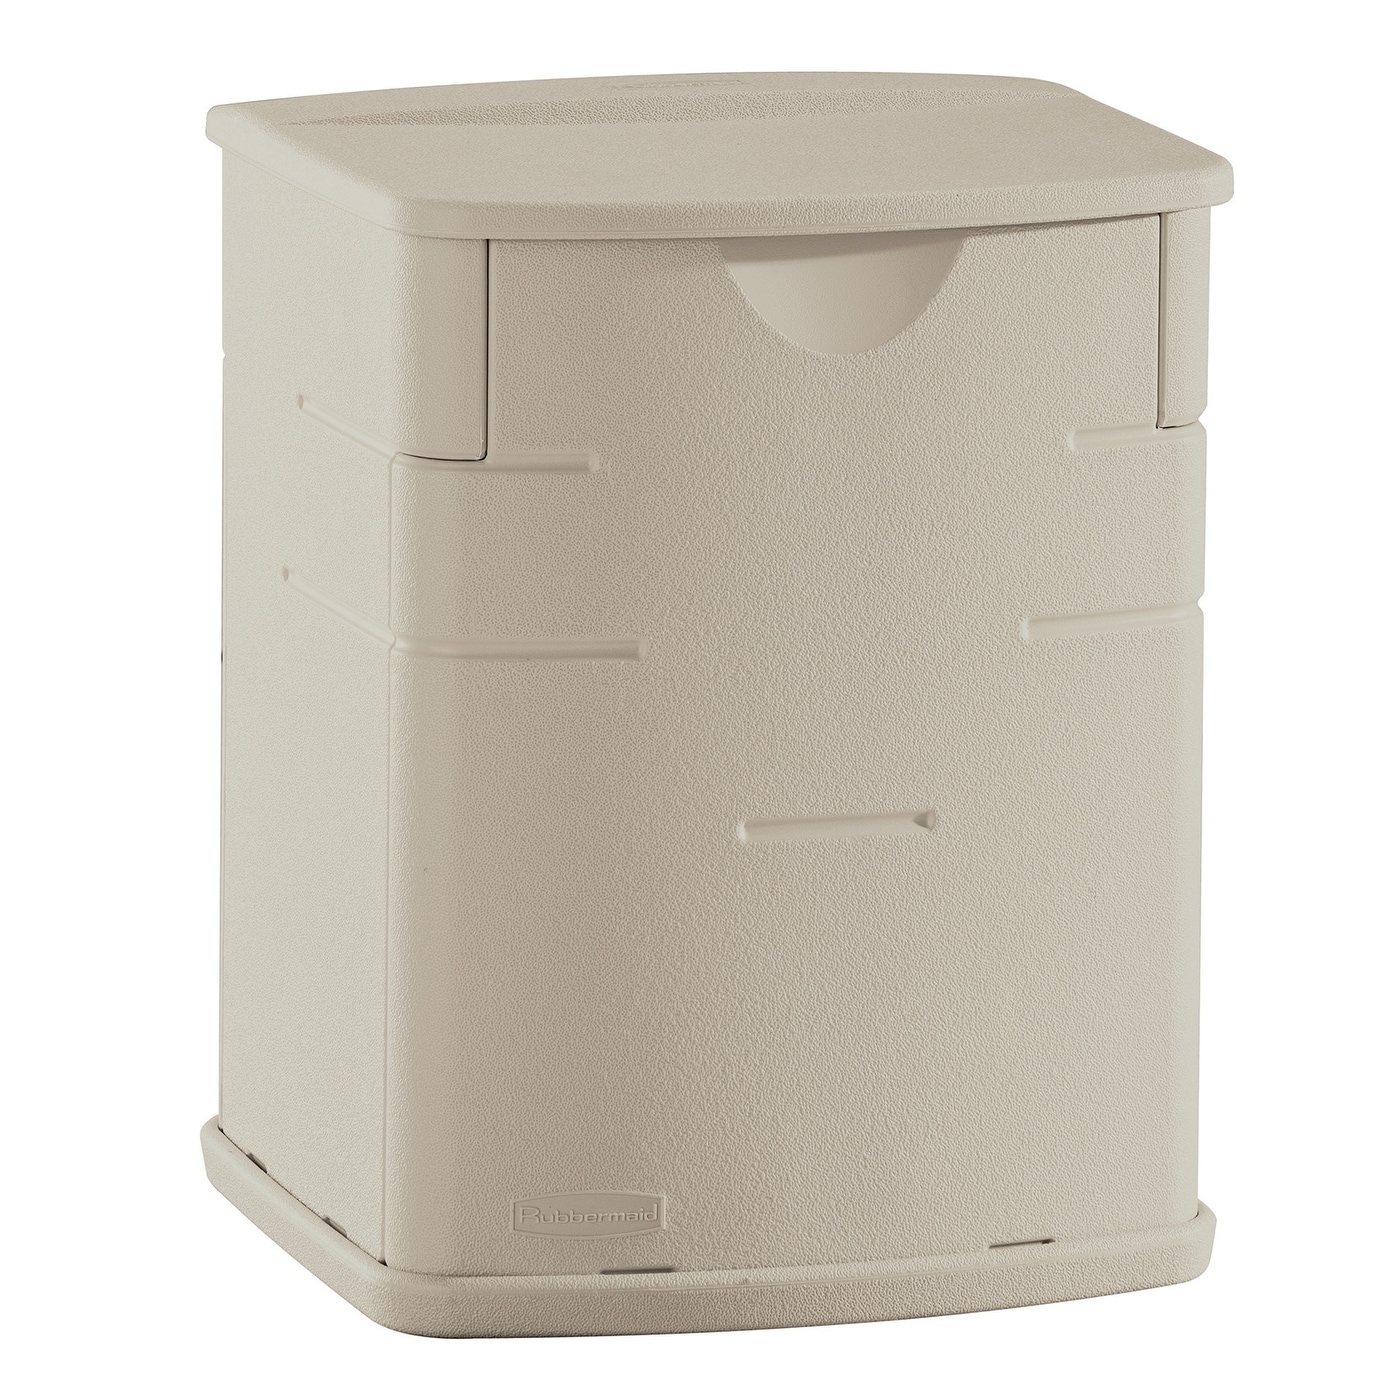 Rubbermaid FG374301 6 Wide Polyethylene Outdoor Storage Box - Sandstone